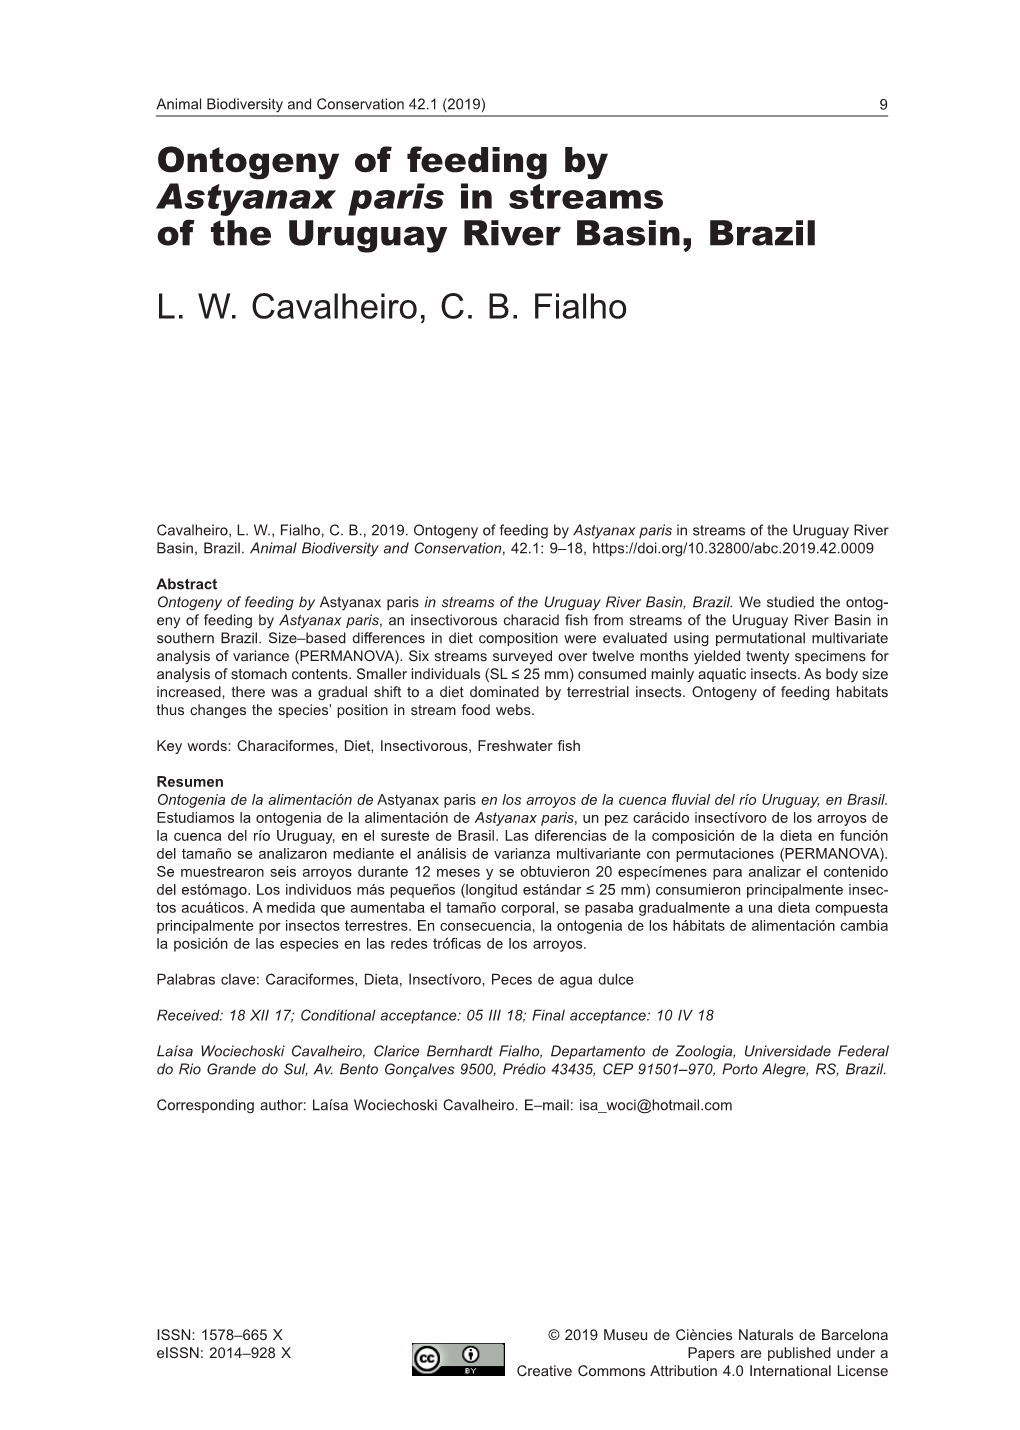 Ontogeny of Feeding by Astyanax Paris in Streams of the Uruguay River Basin, Brazil L. W. Cavalheiro, C. B. Fialho